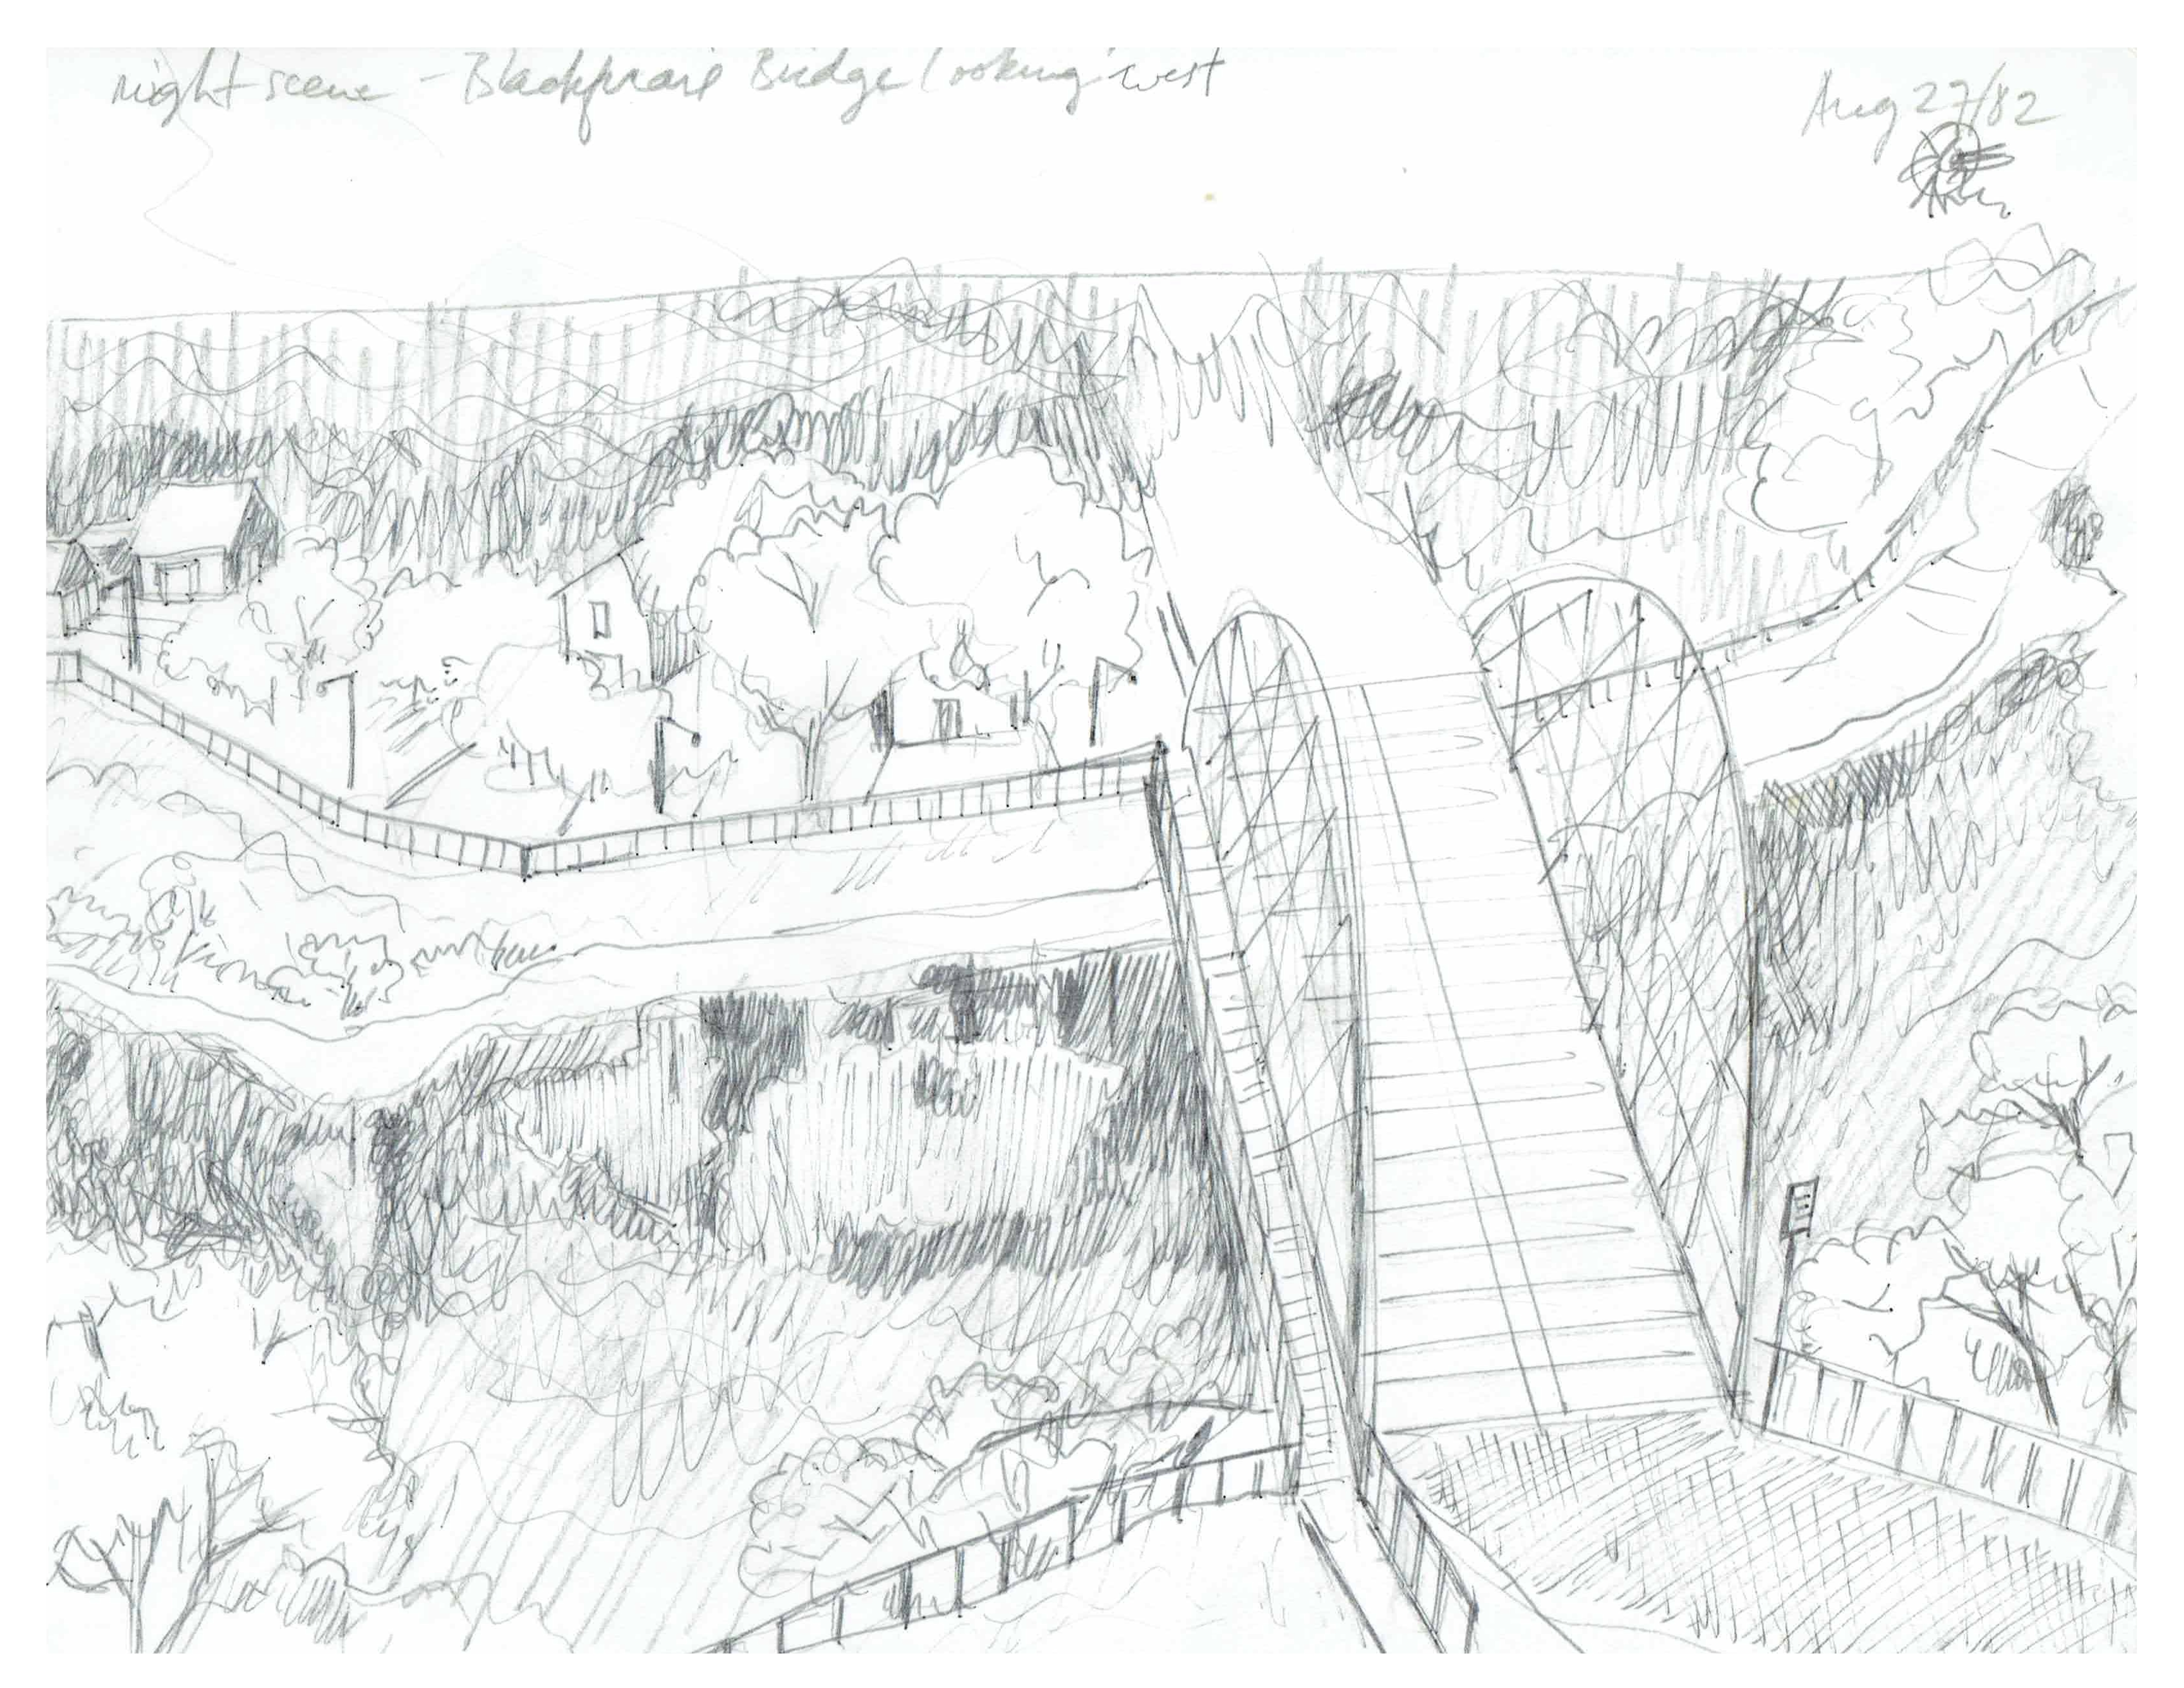 Night scene - Blackfriars Bridge looking west, Aug 27,1982, ink on paper, 21.6 cm x 28 cm